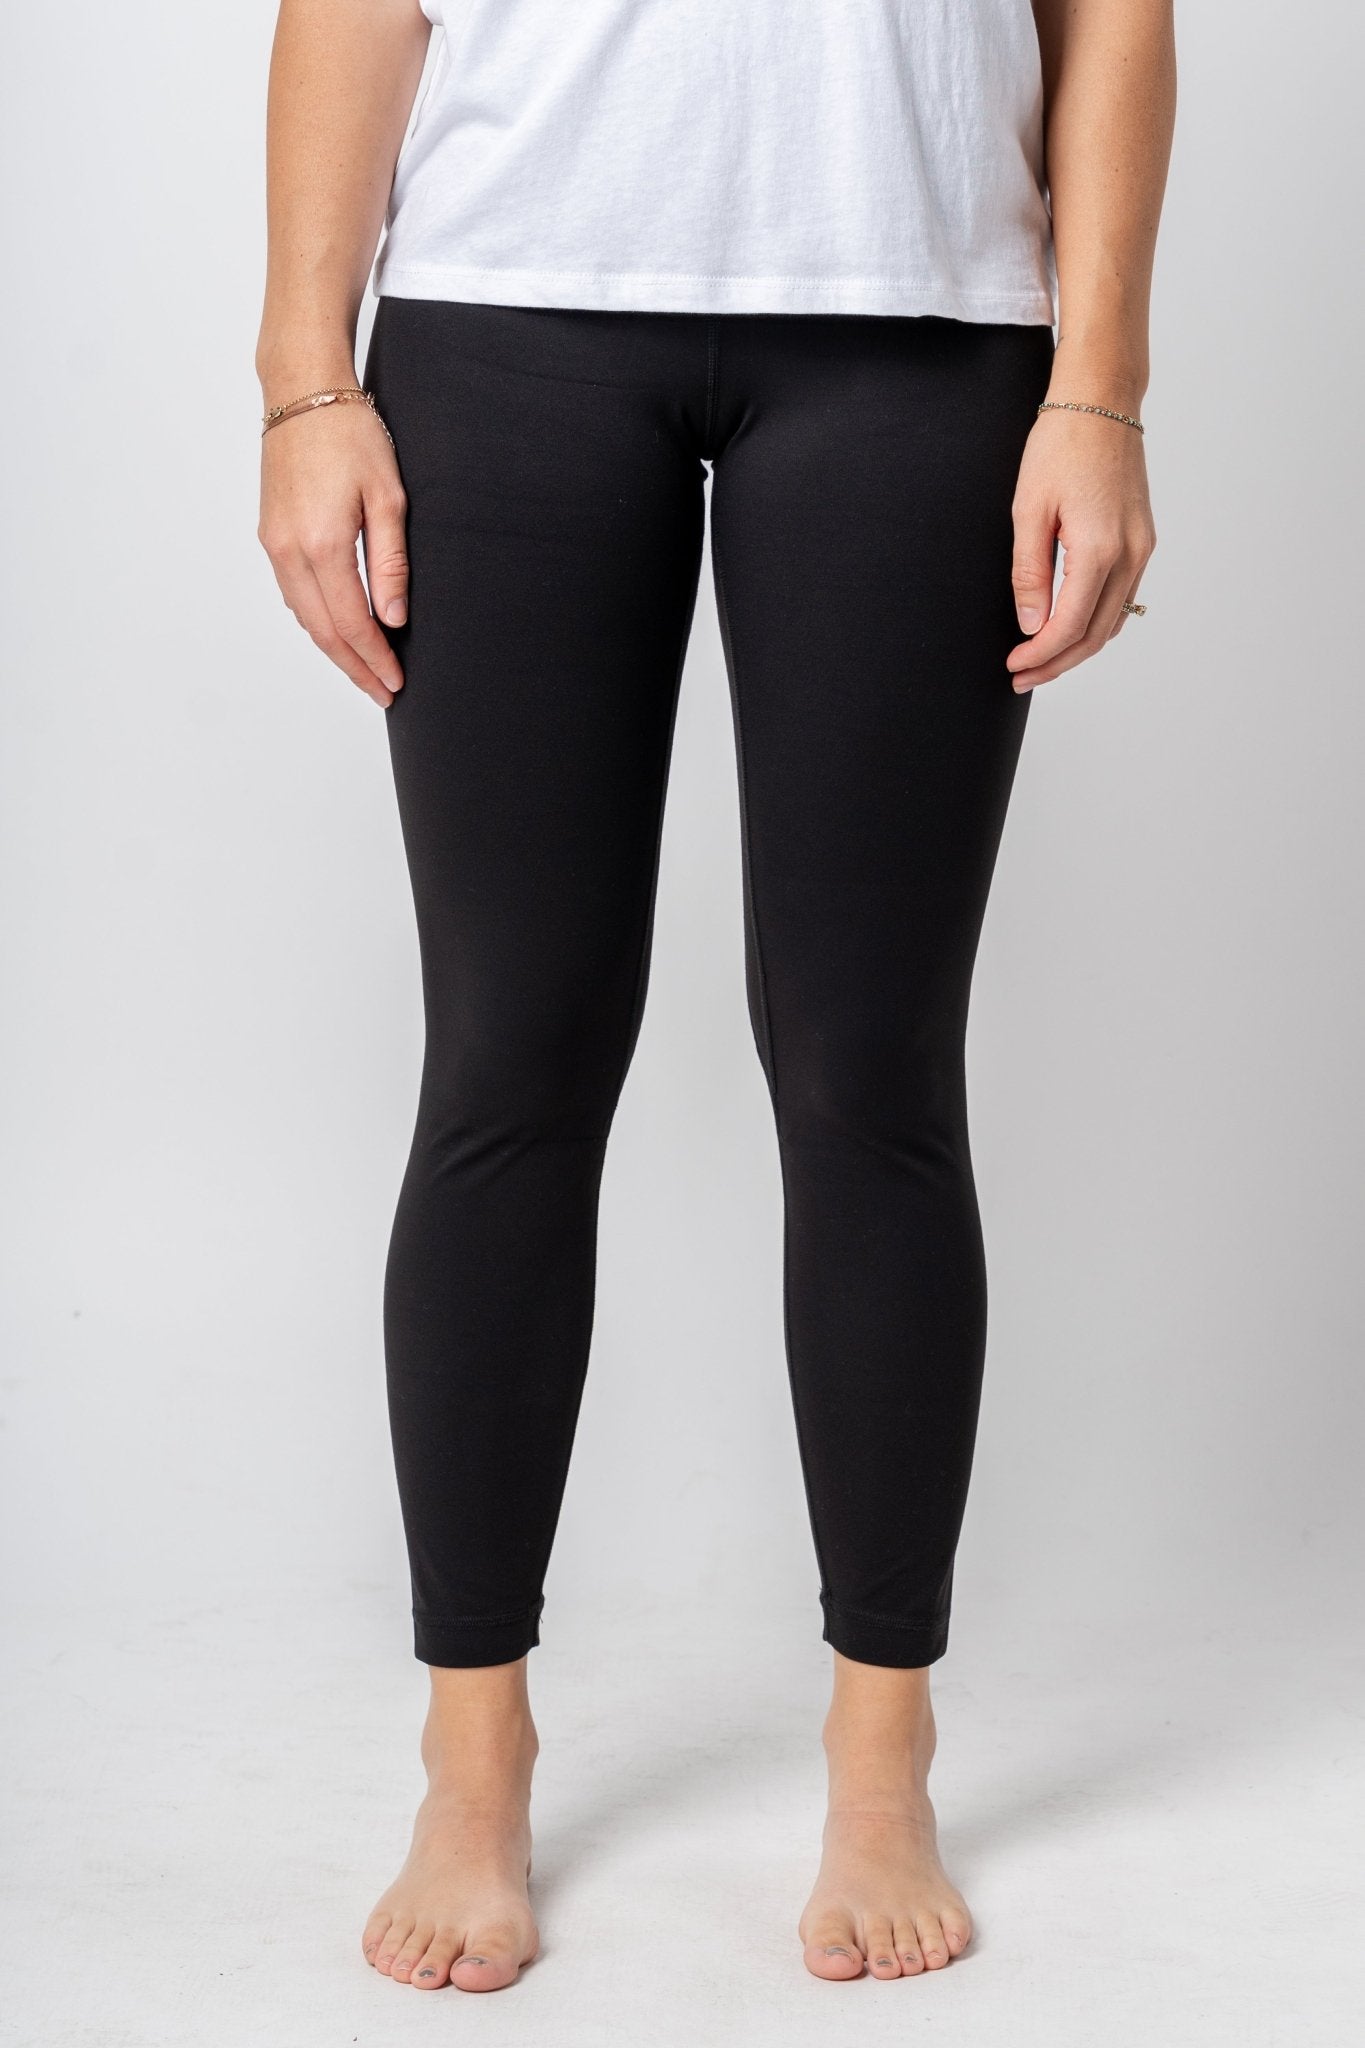 High waist leggings black | Lush Fashion Lounge: women's boutique leggings, boutique fashion leggings, boutique exercise leggings, cute affordable leggings